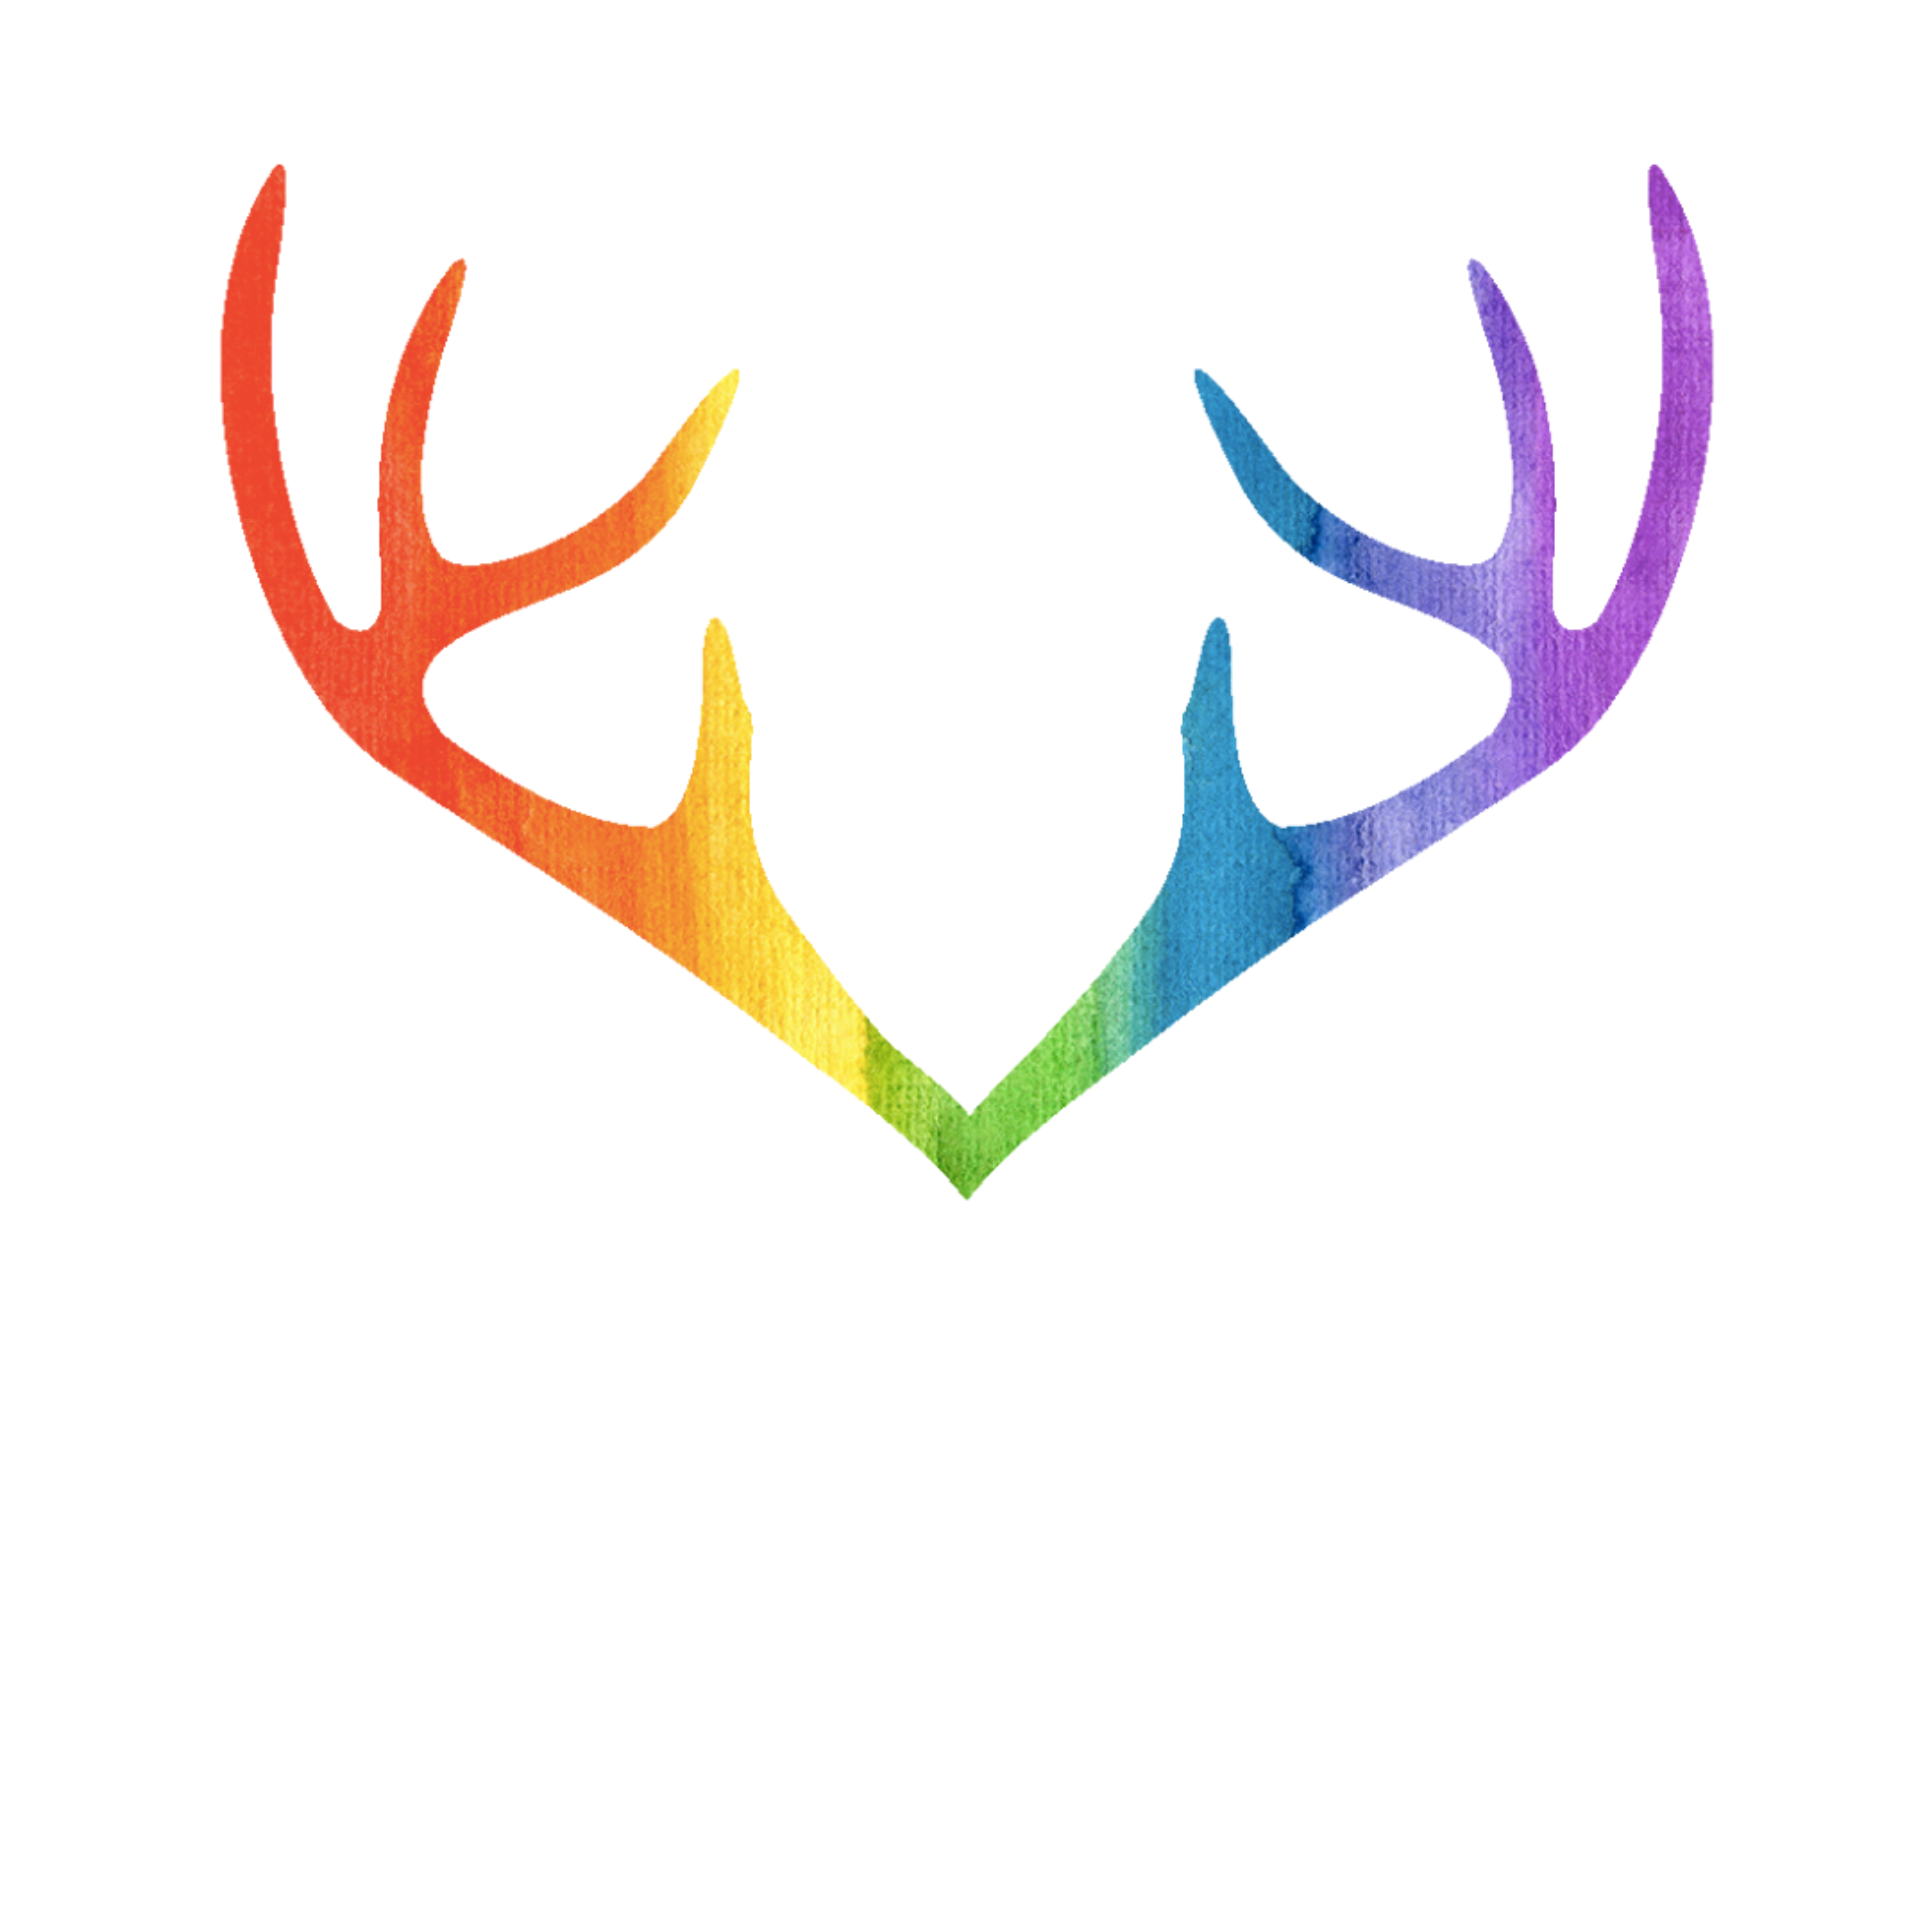 Red Deer Queer Community Association